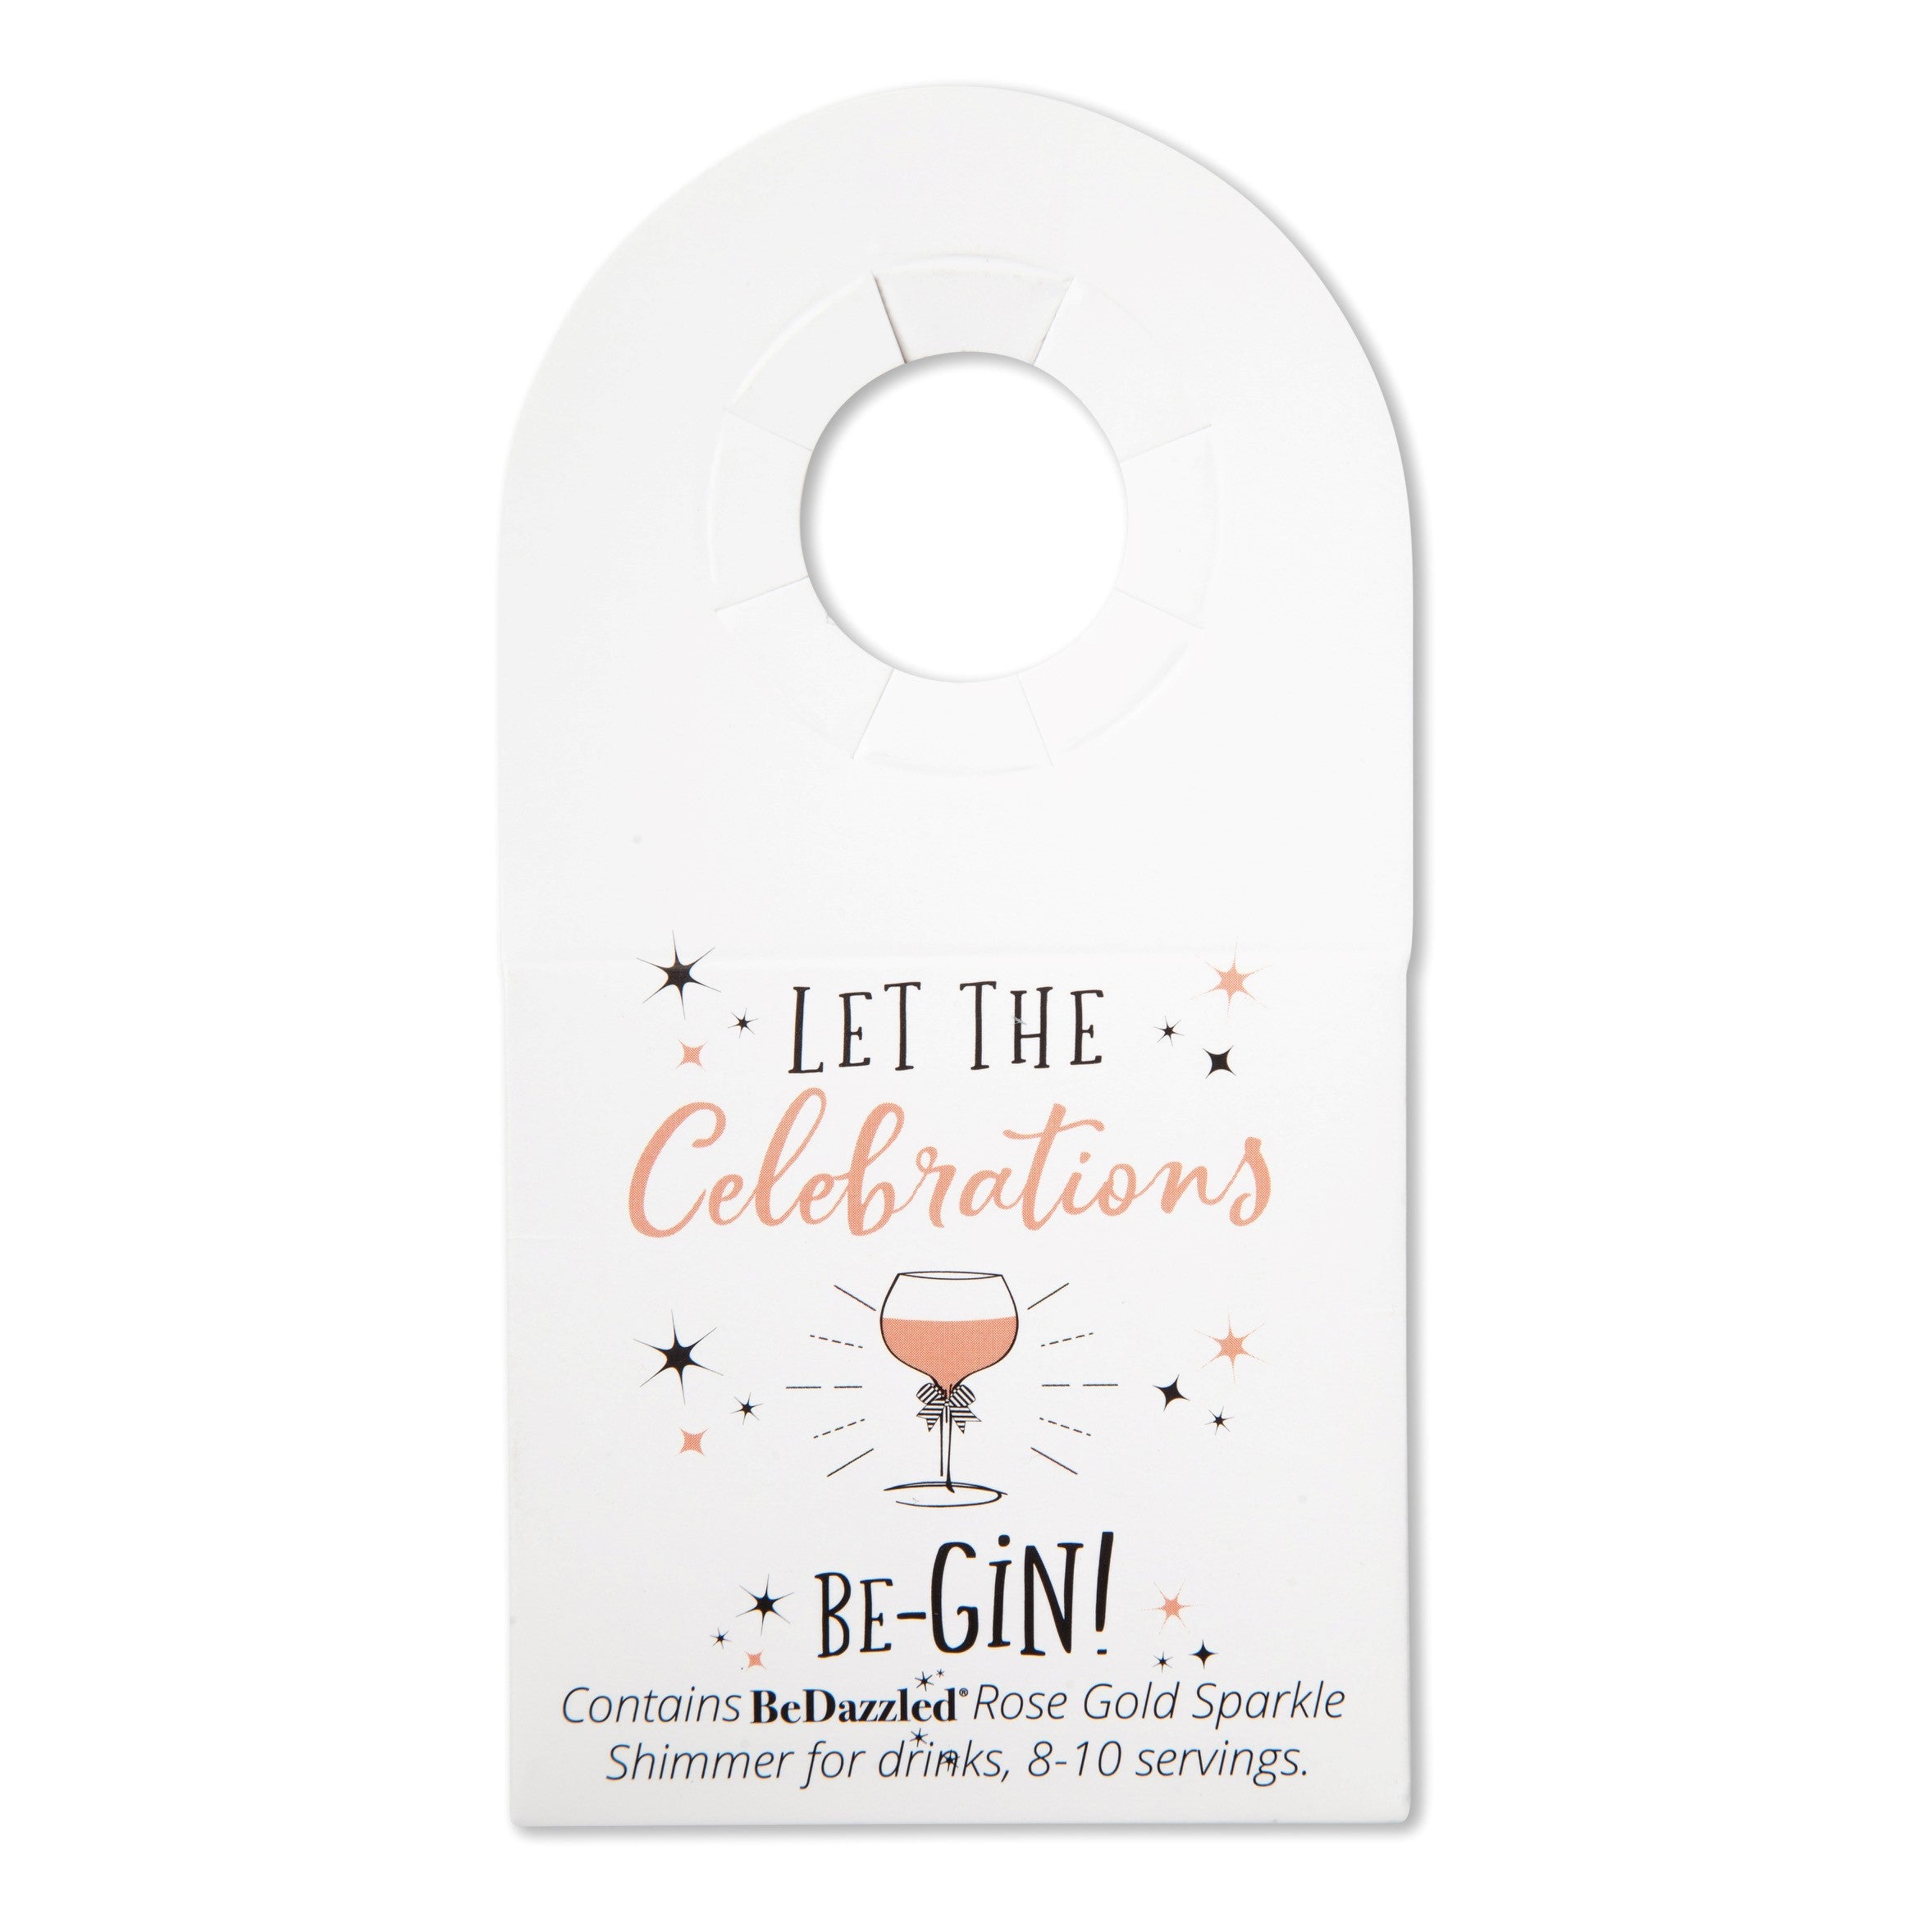 Let the Celebrations beGIN! - bottle neck gift tag containing ROSE GOLD shimmer